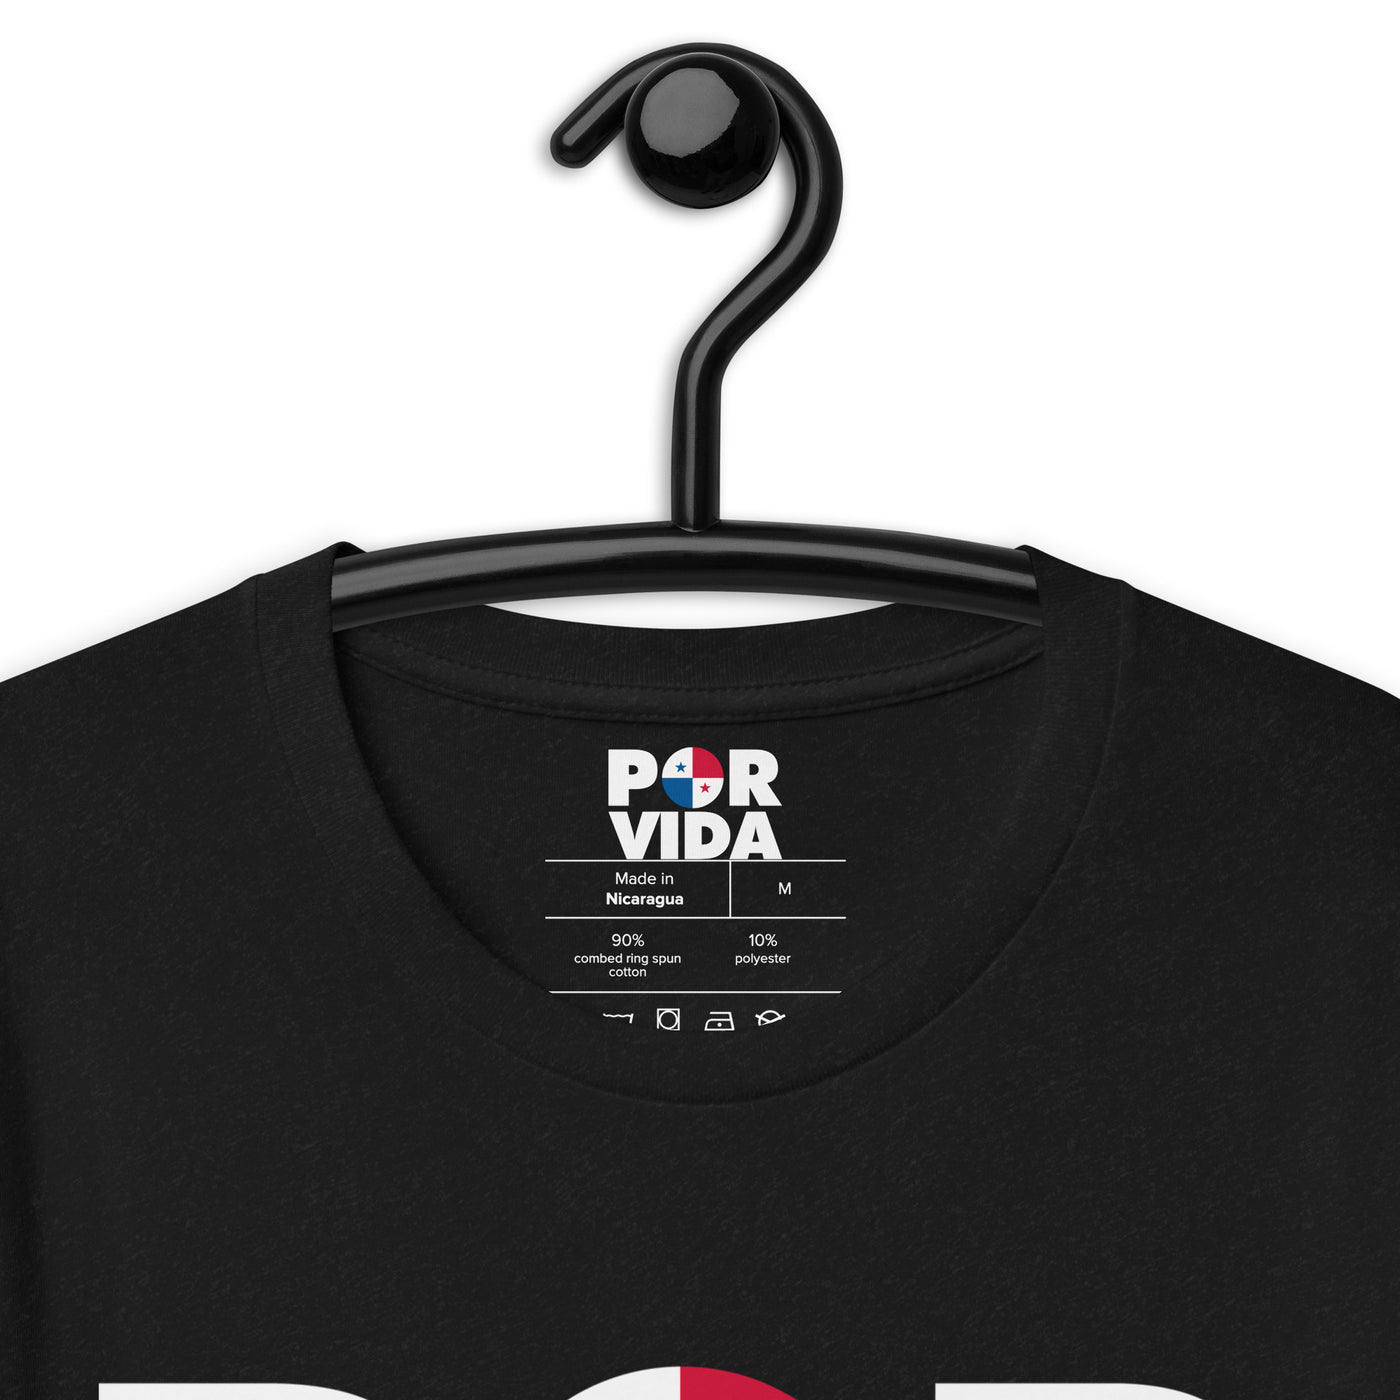 Panama POR VIDA (White Text) Unisex t-shirt